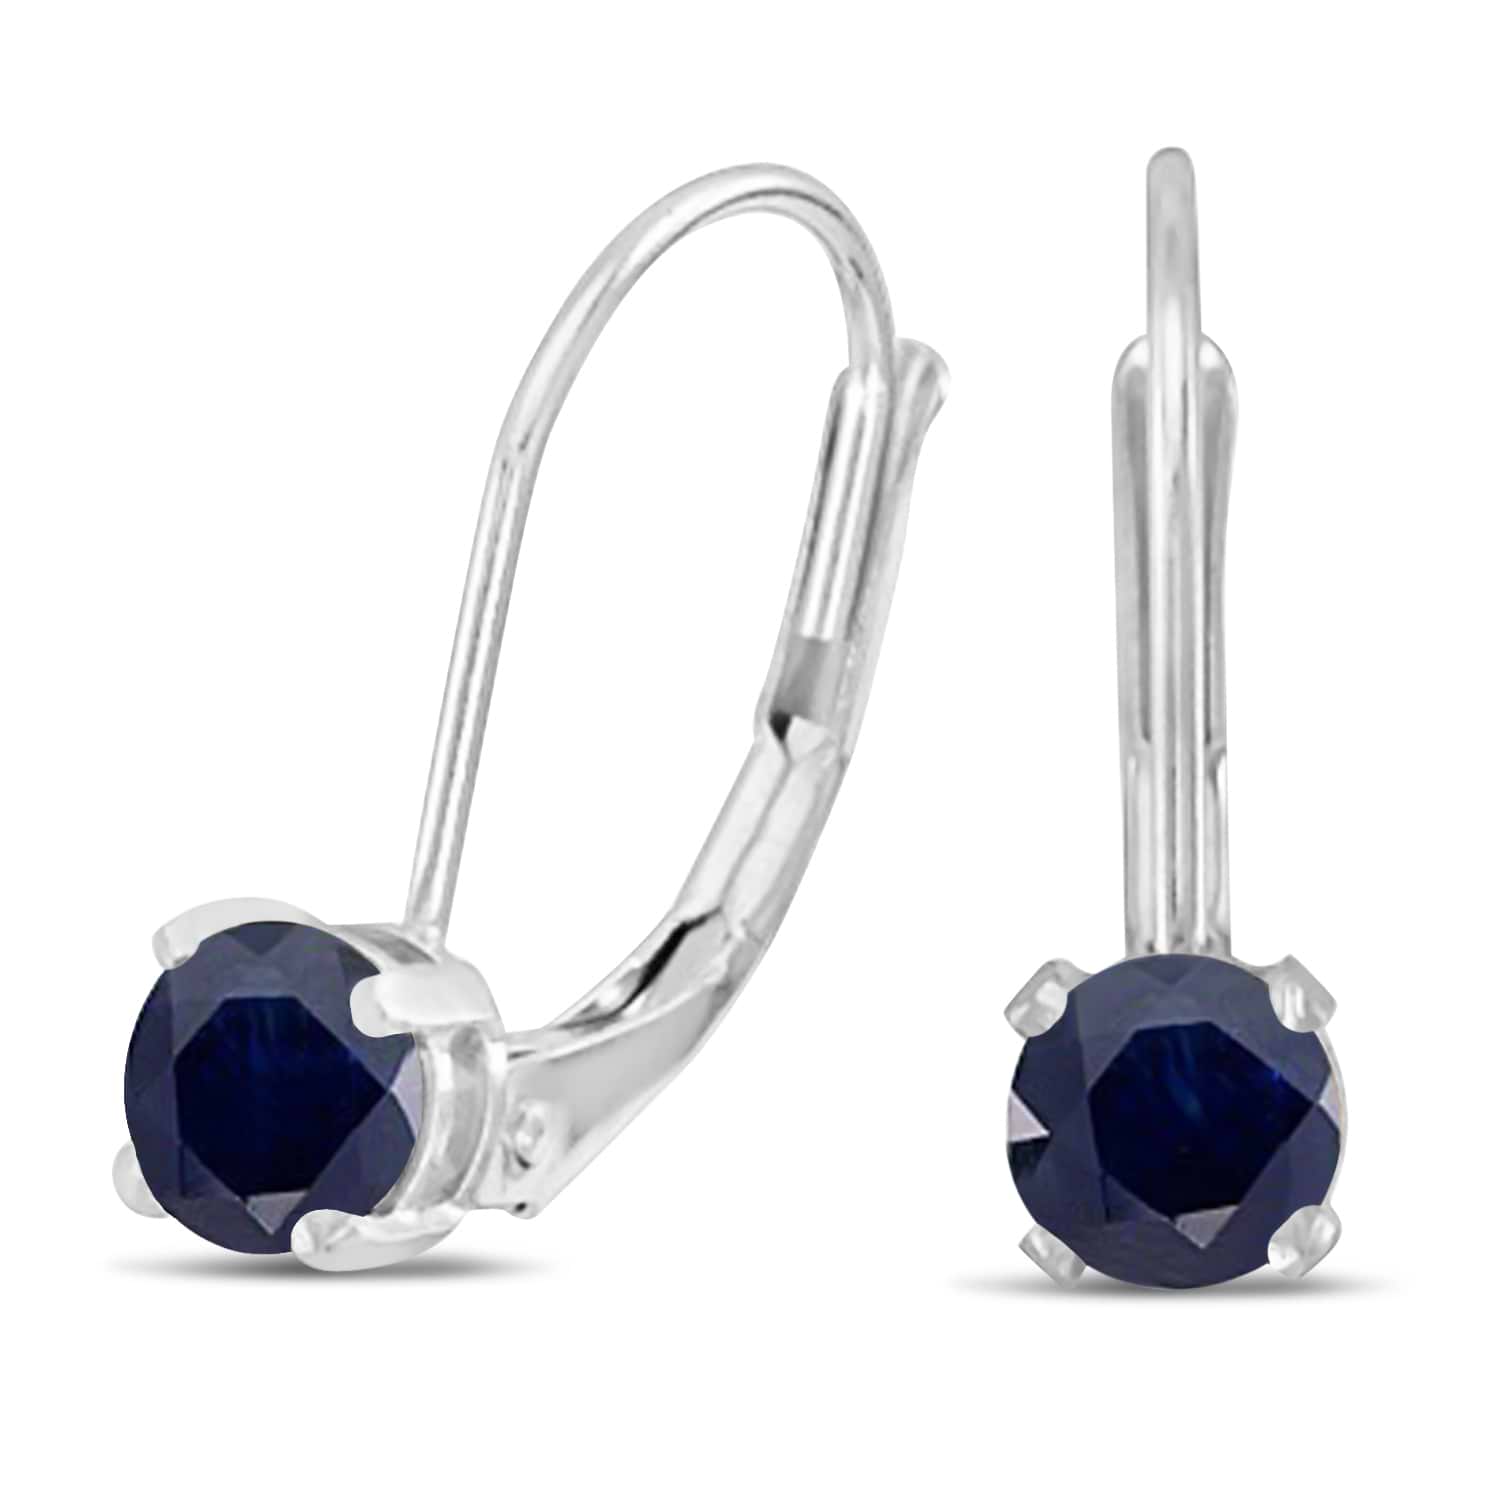 Blue Sapphire Lever-Back Drop Earrings 14k White Gold (0.60ctw)